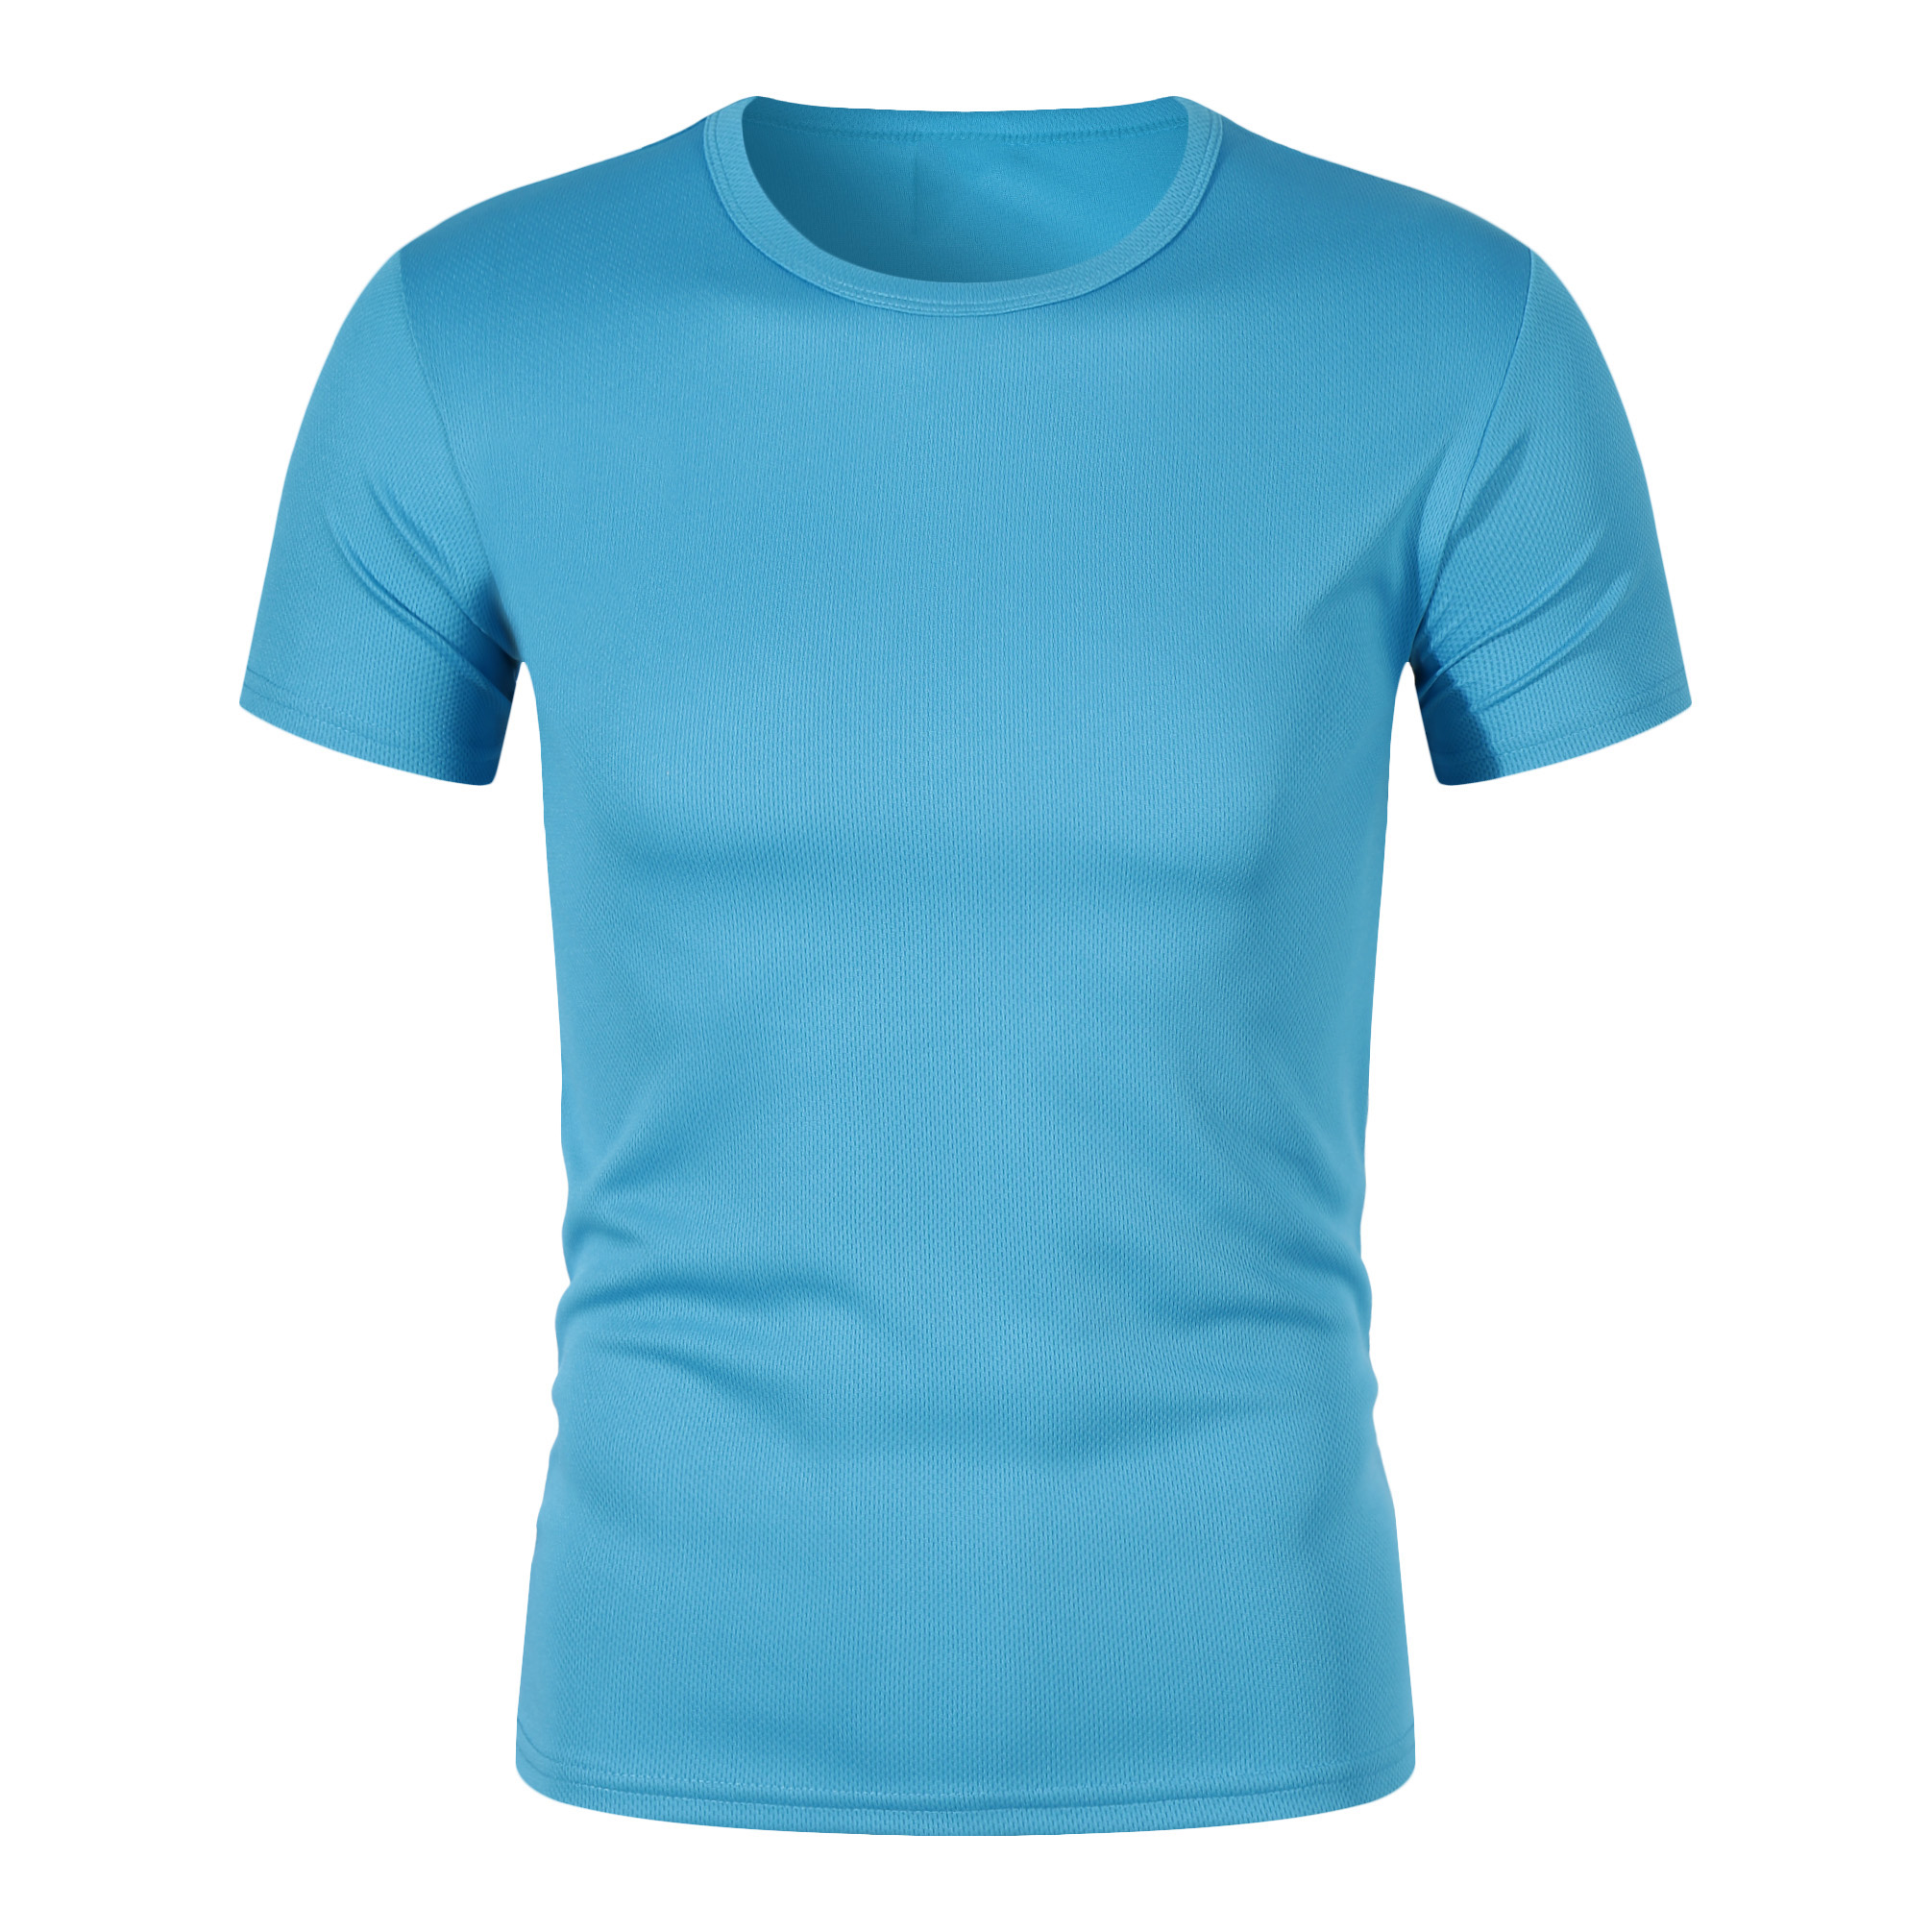 OEM/ODM Supplier Designer Sweatshirts - Plain sports dry fit breathable comfortable polyester bird eye fabric men t shirt – Gift